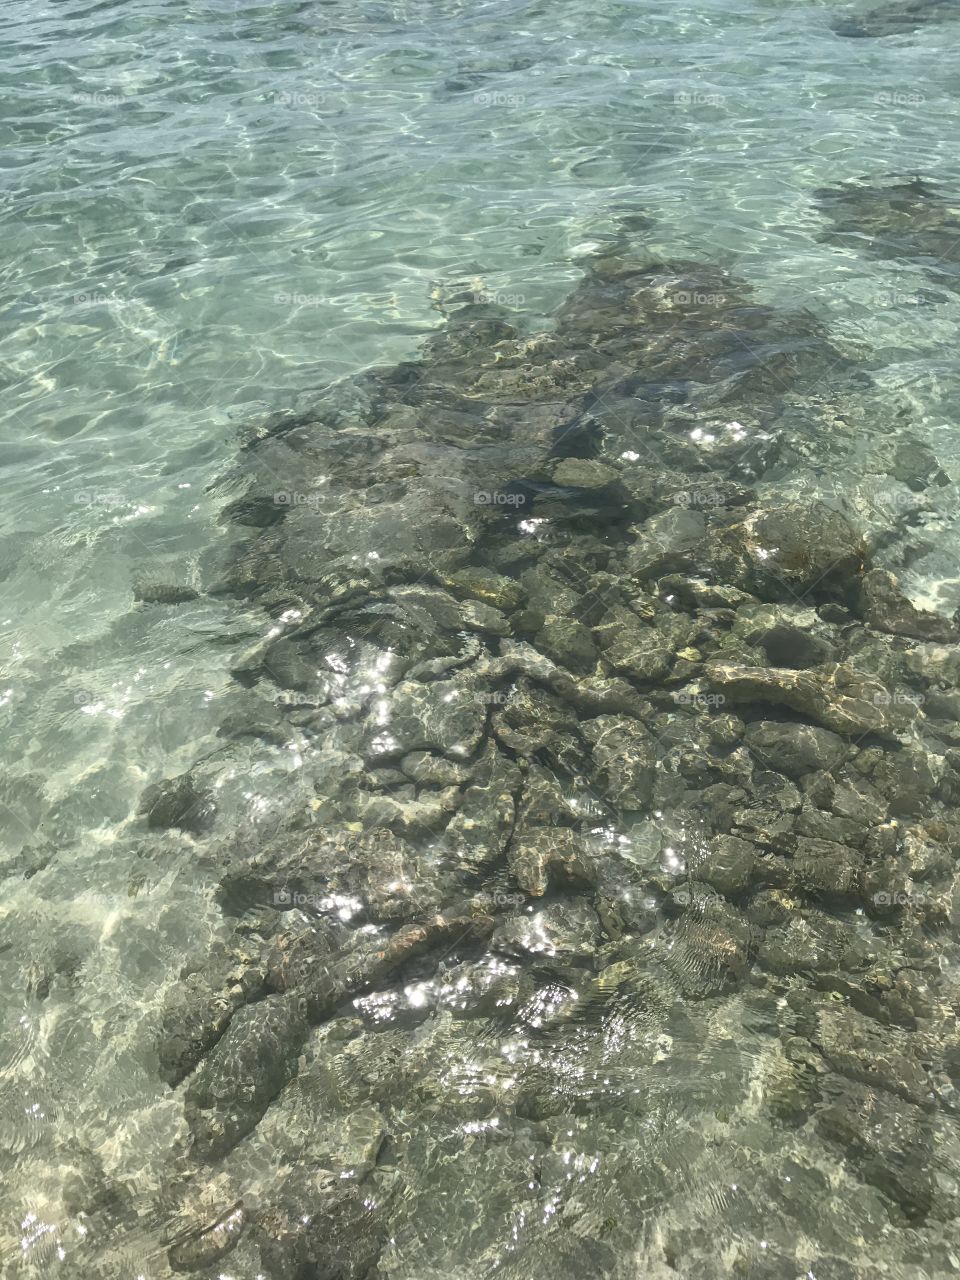 Clear view of rocks underwater